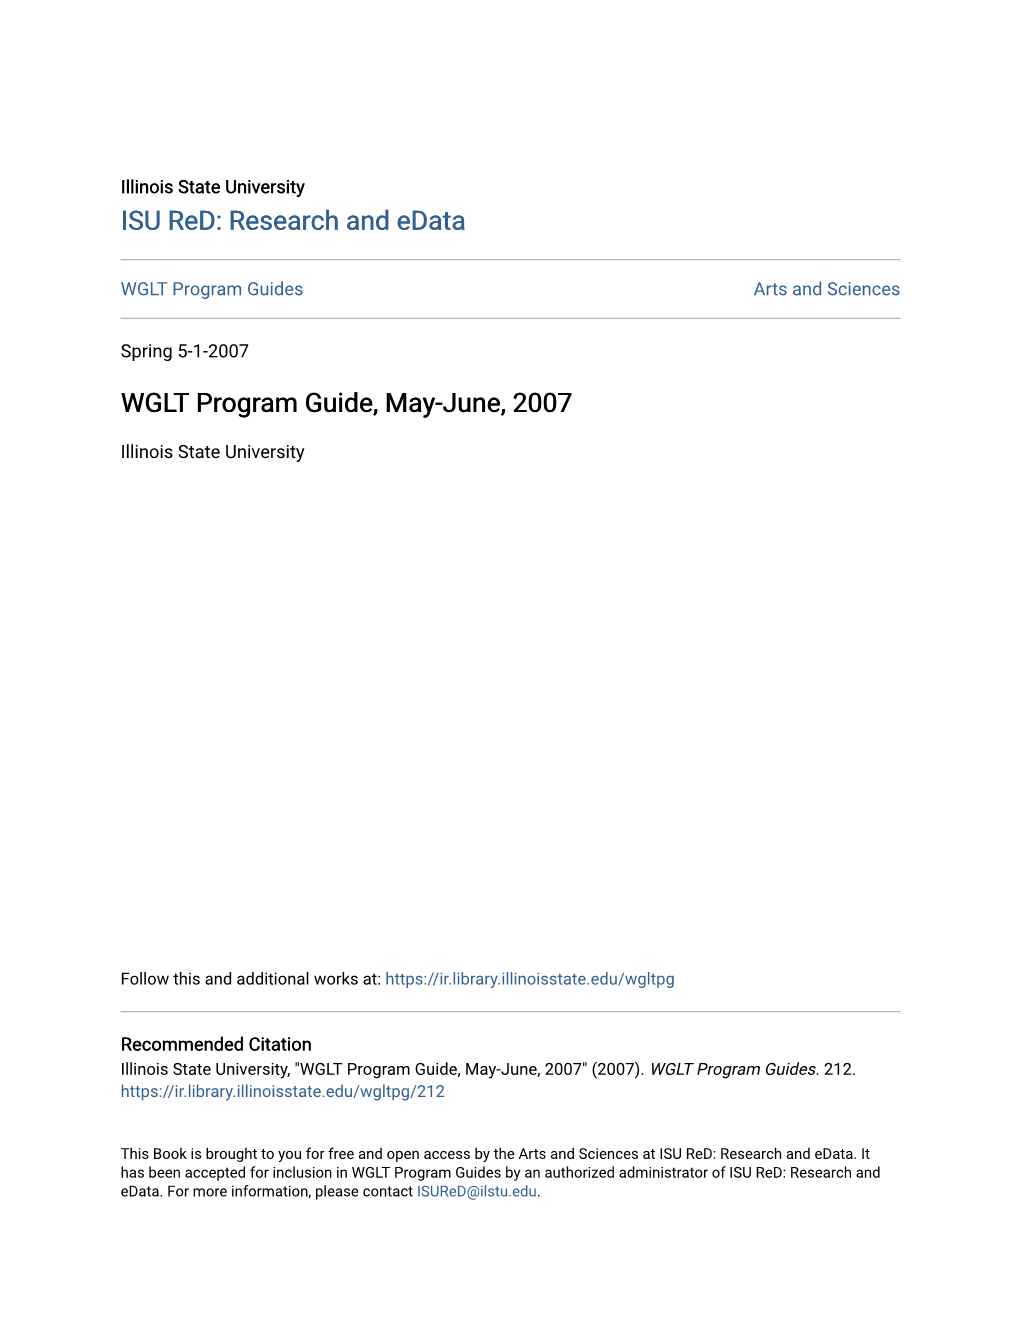 WGLT Program Guide, May-June, 2007